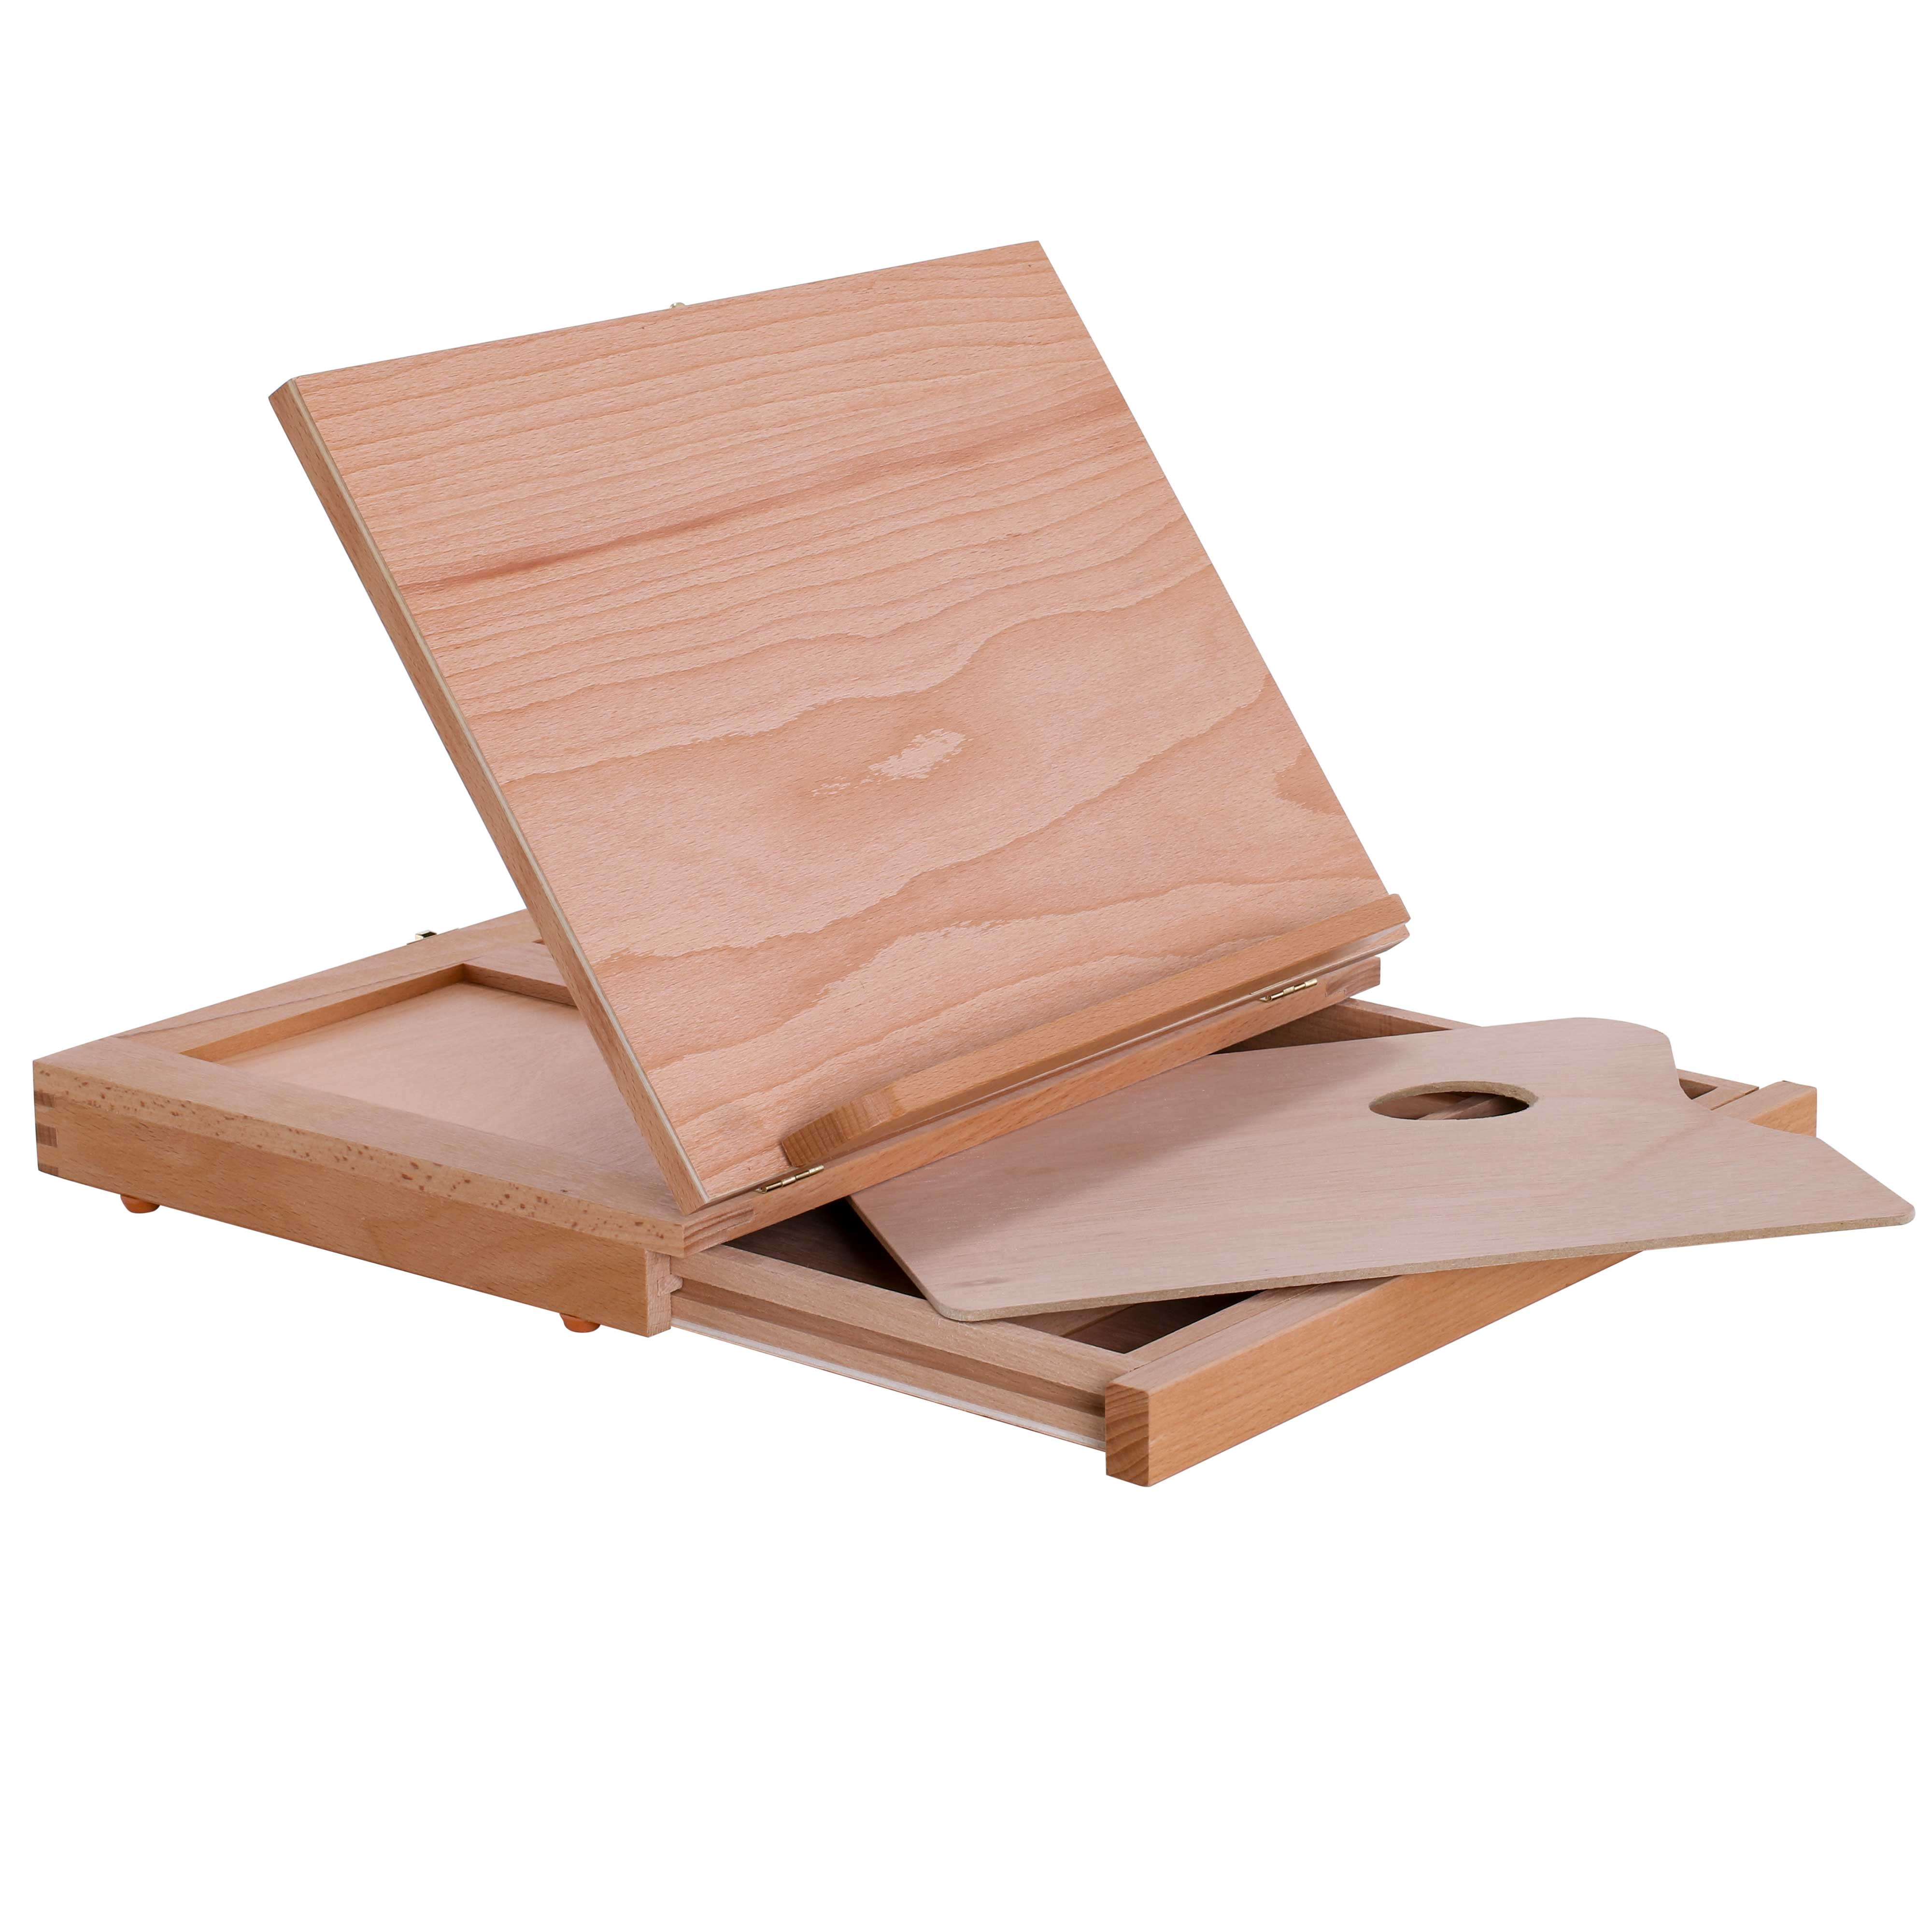 Premium Beech Wood Artist Storage Box - Compartments, Drawer - High-Quality